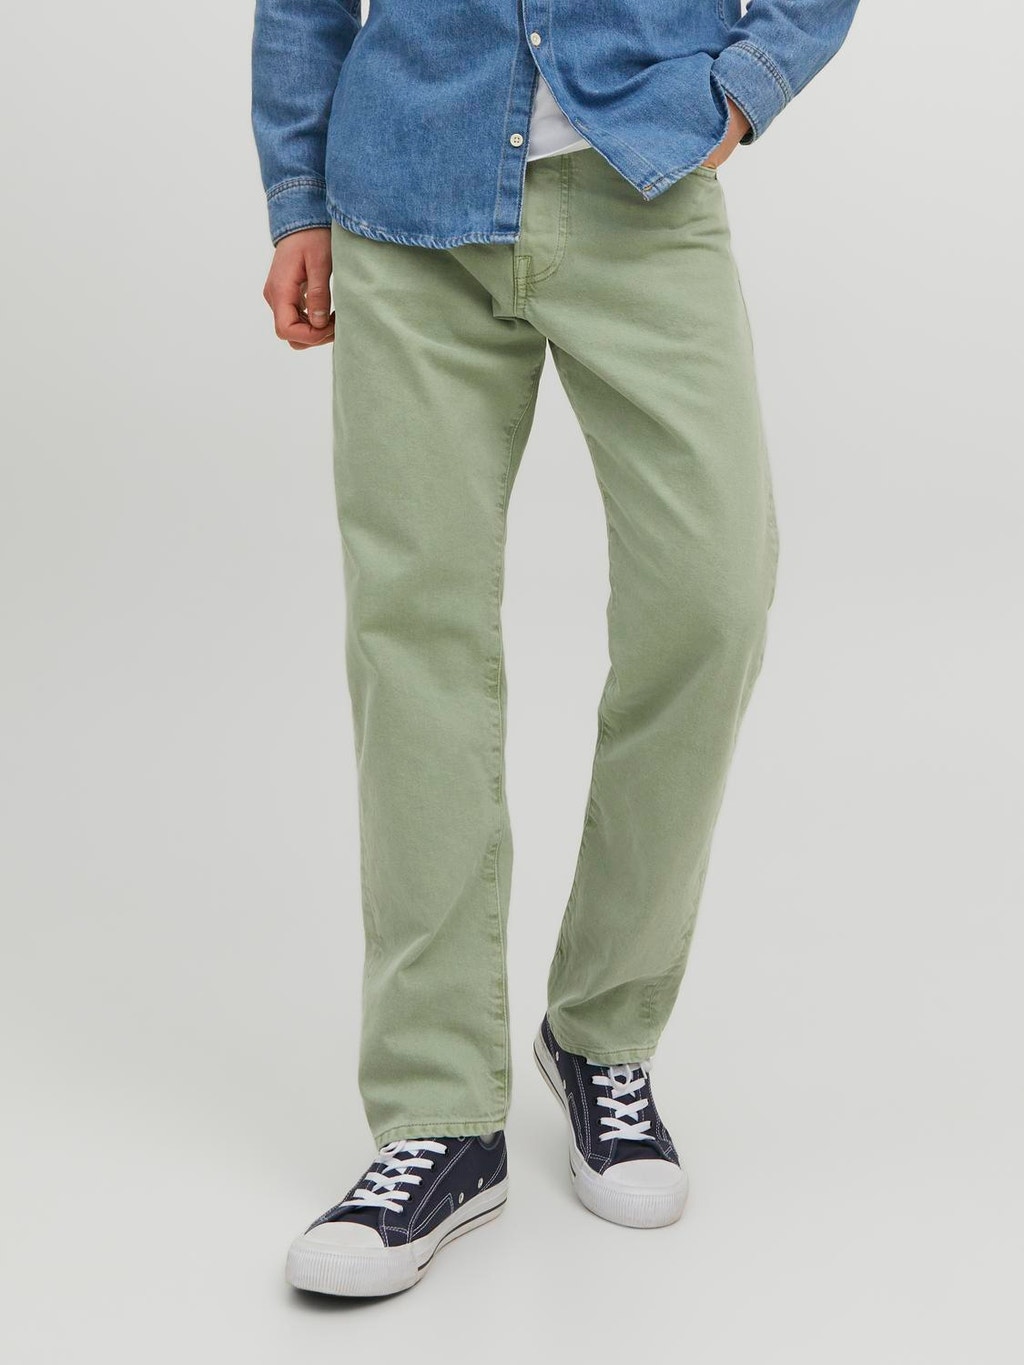 jackjones.com | Chris Cooper Cj 772 Lid Loose Fit Jeans